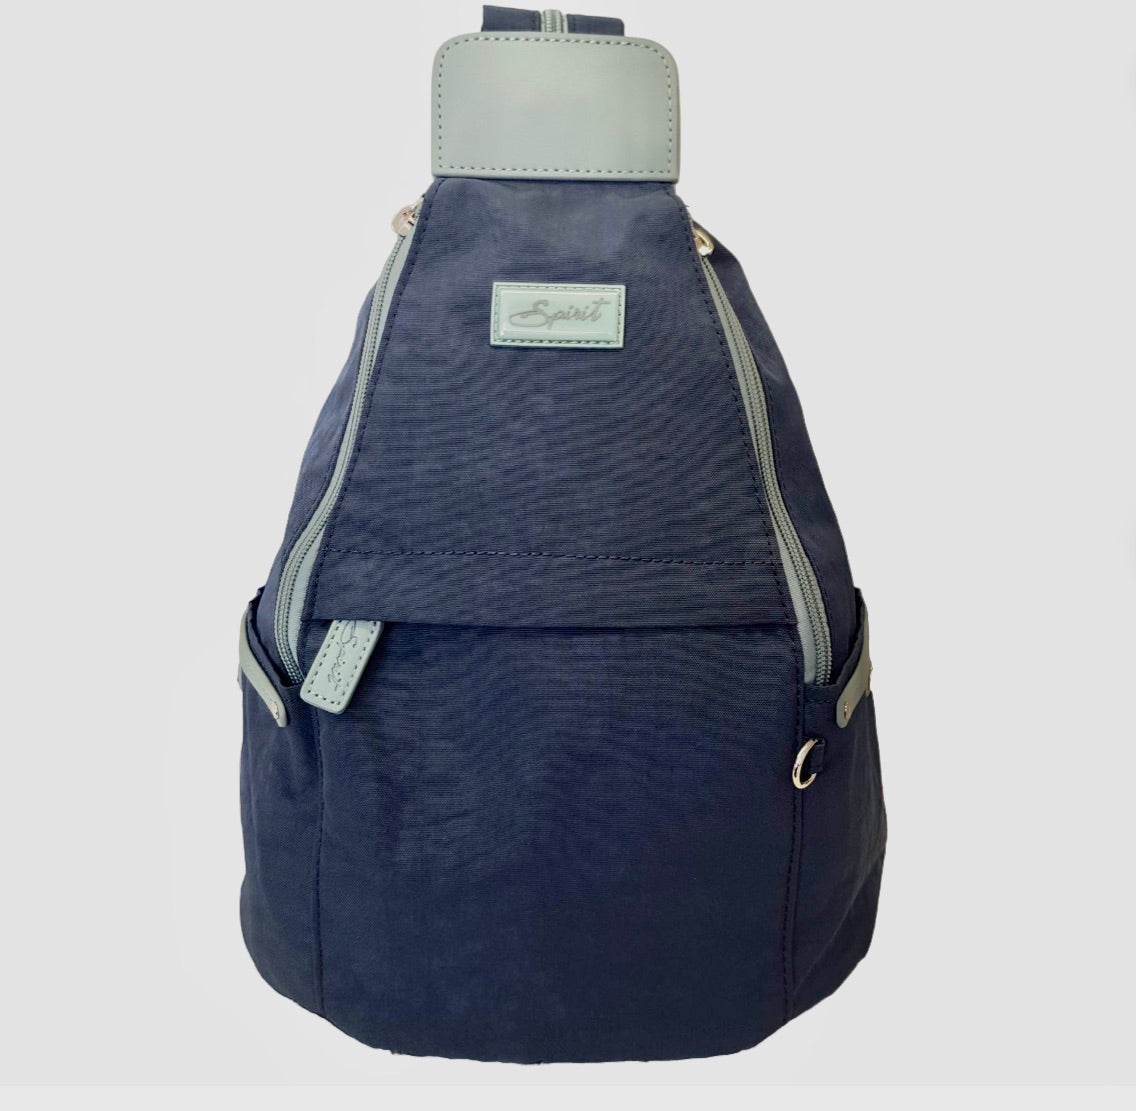 Spirit Lightweight Backpack - Navy/Stone